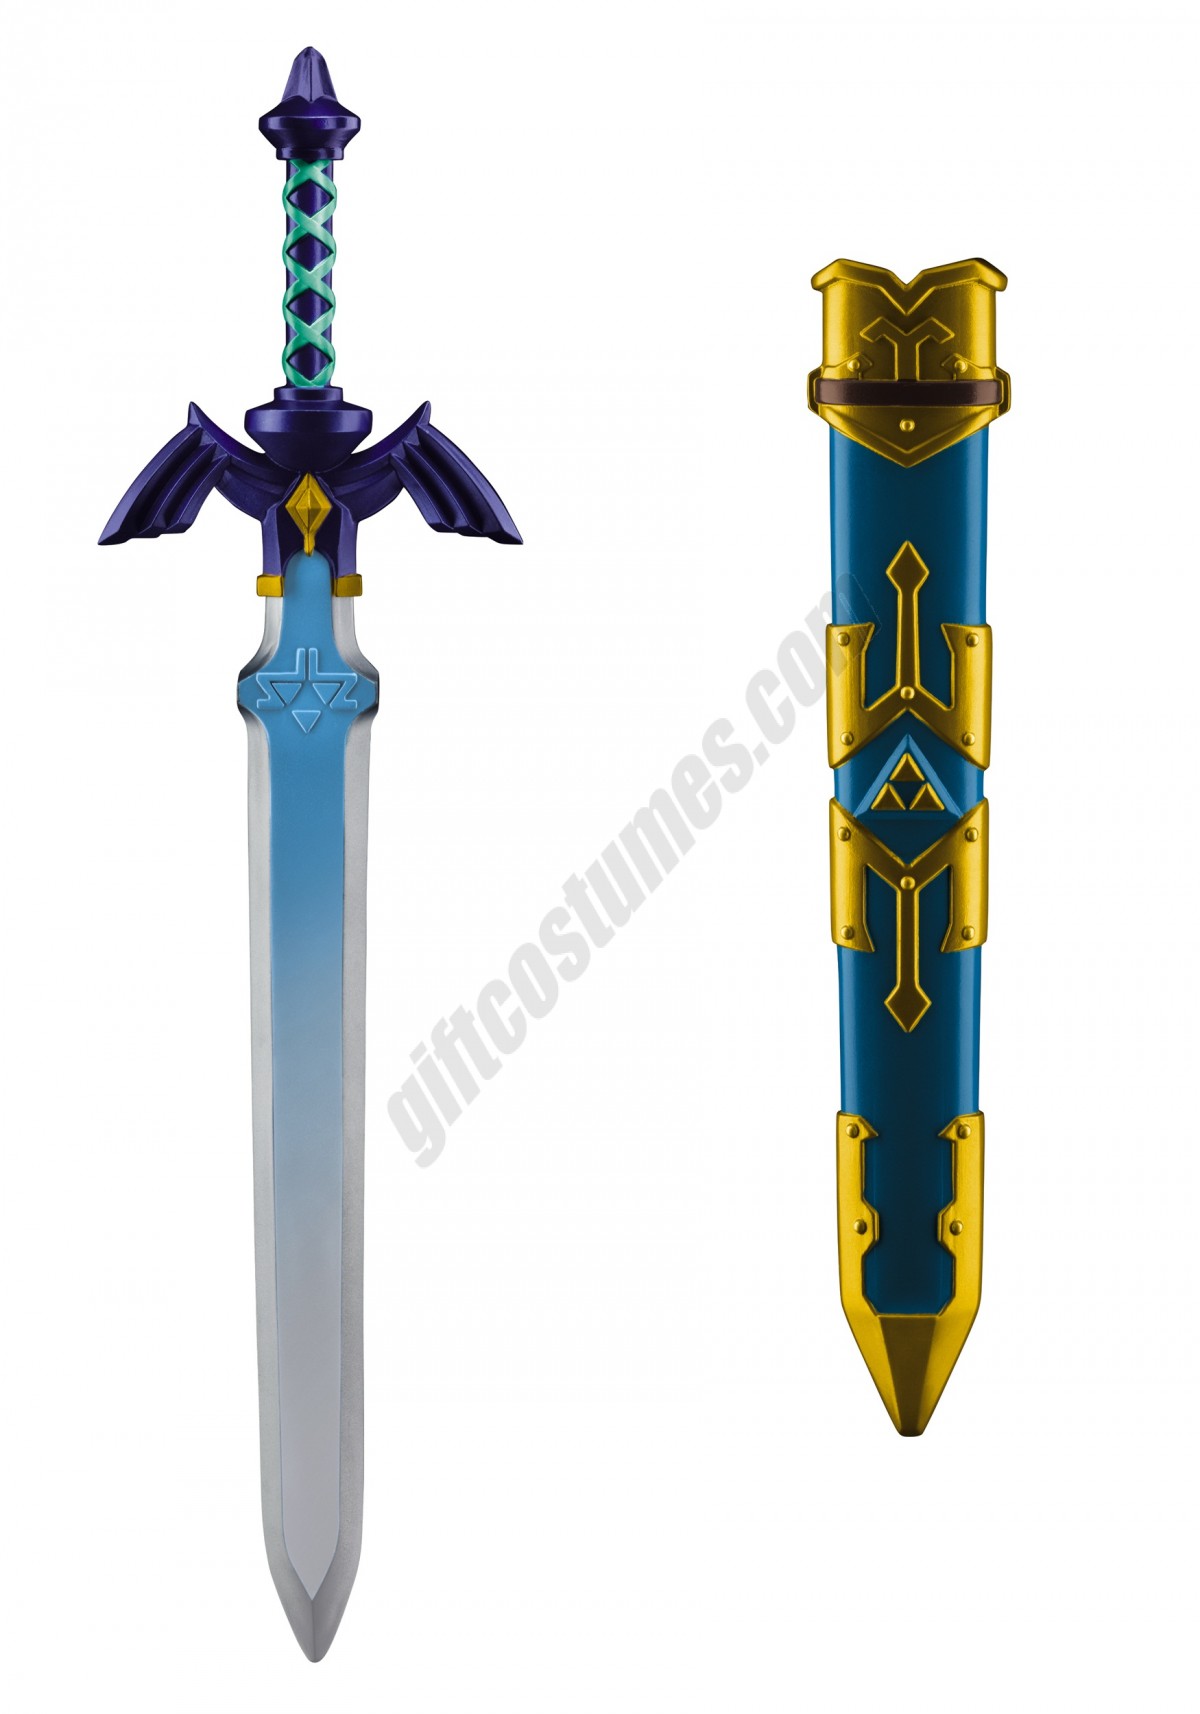 Legend of Zelda Link Sword Promotions - -0